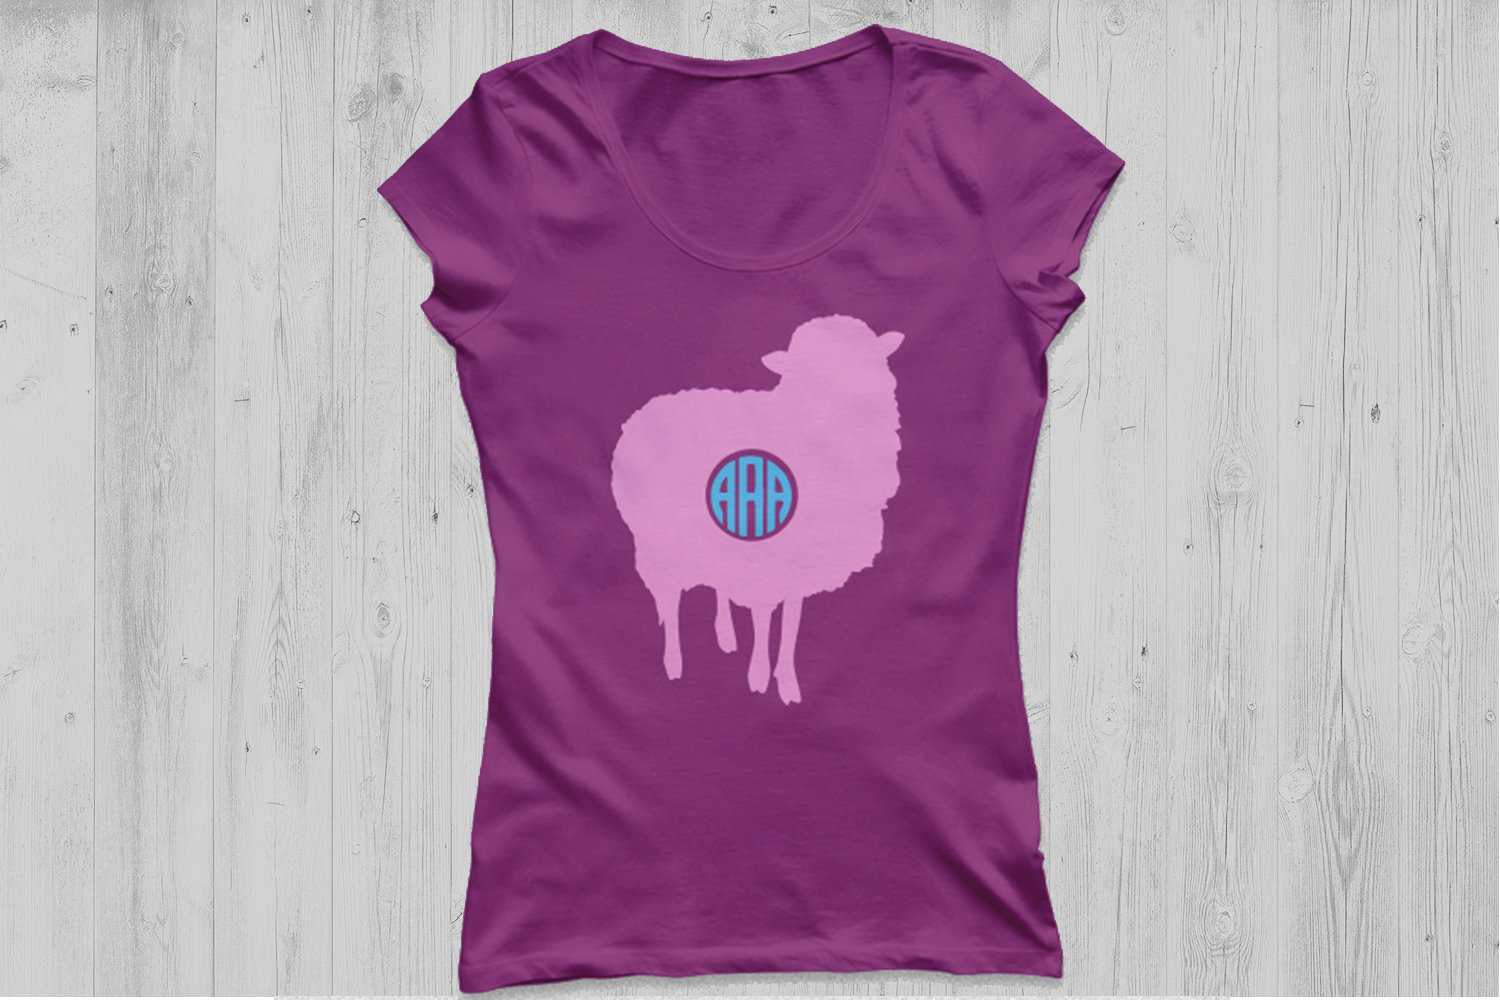 Download Sheep SVG cut file, sheep monogram svg, farm animals svg ...